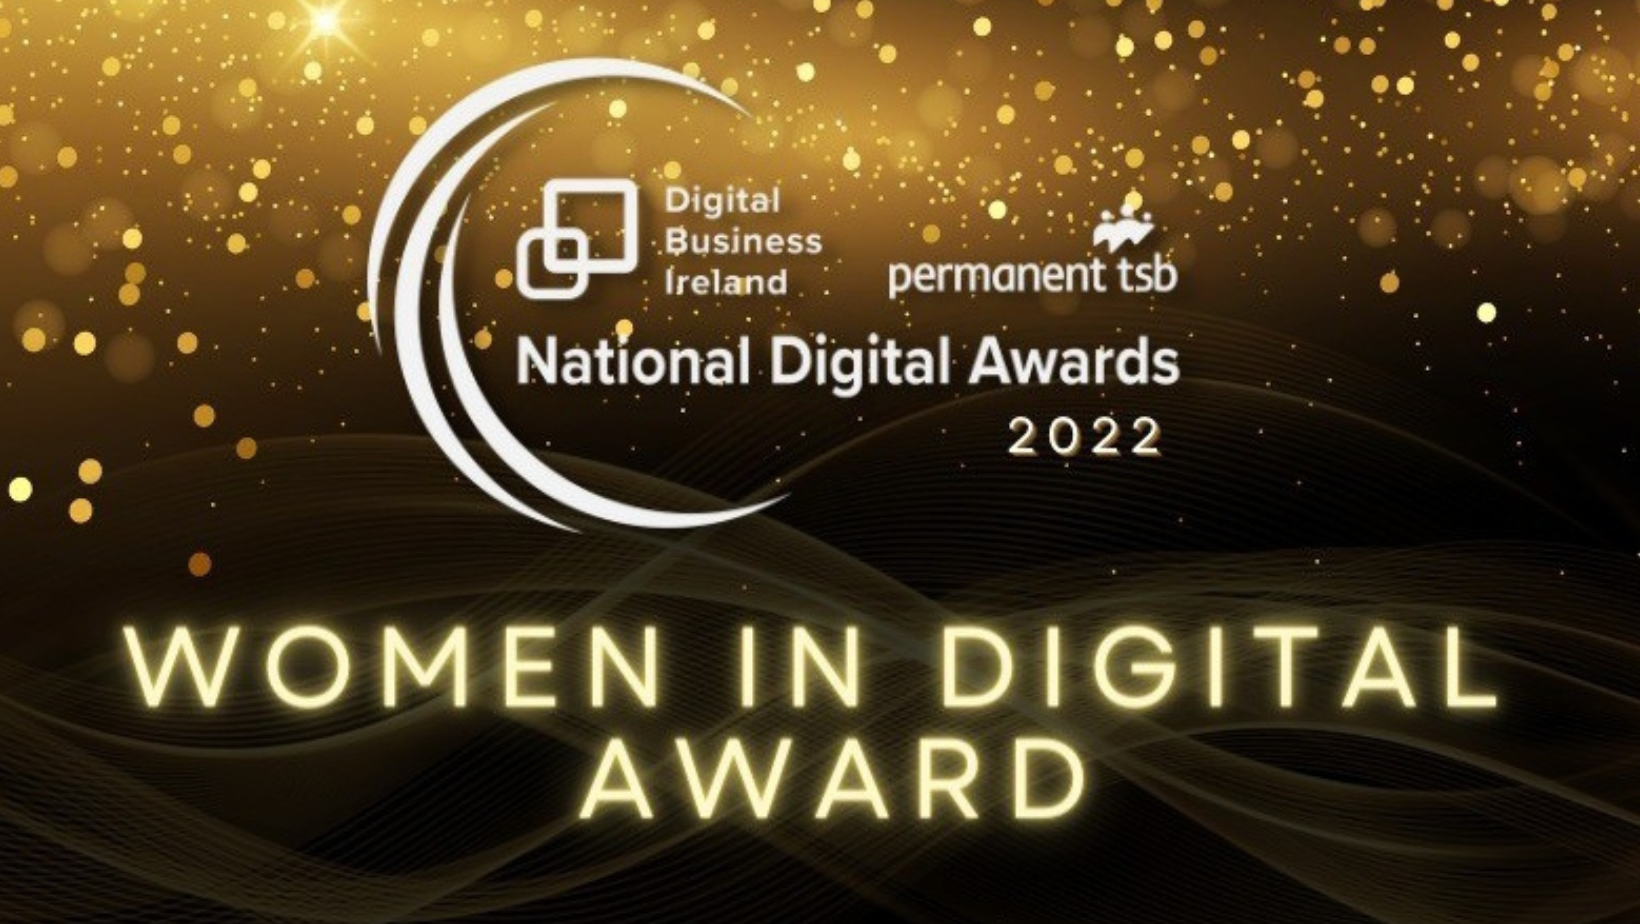 Women in Digital Award Finalist 2022. National Digital Awards, Digital Business Ireland - Permanent tsb